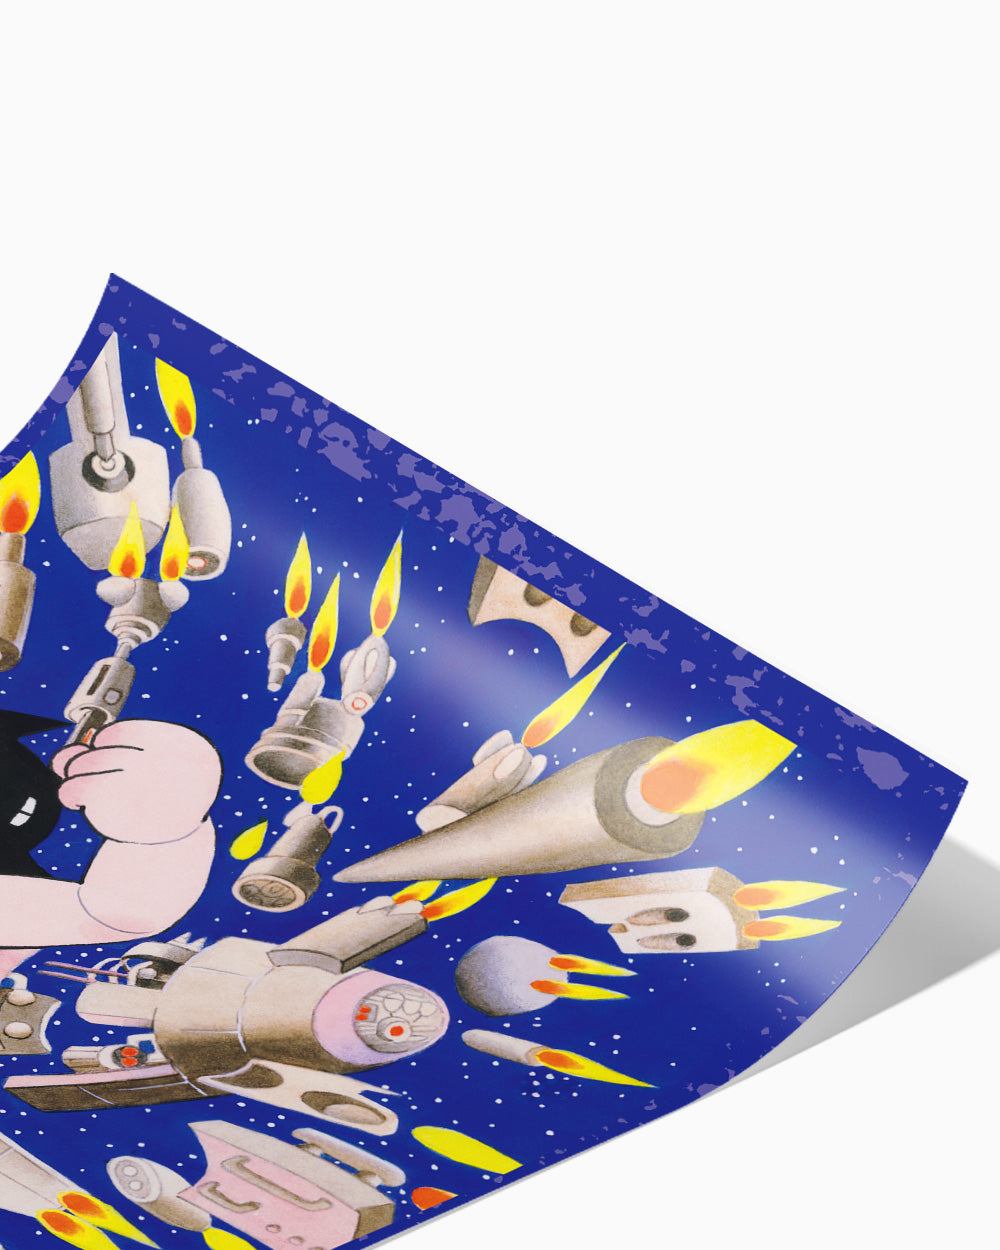 Astro Boy Space Rockets Art Print